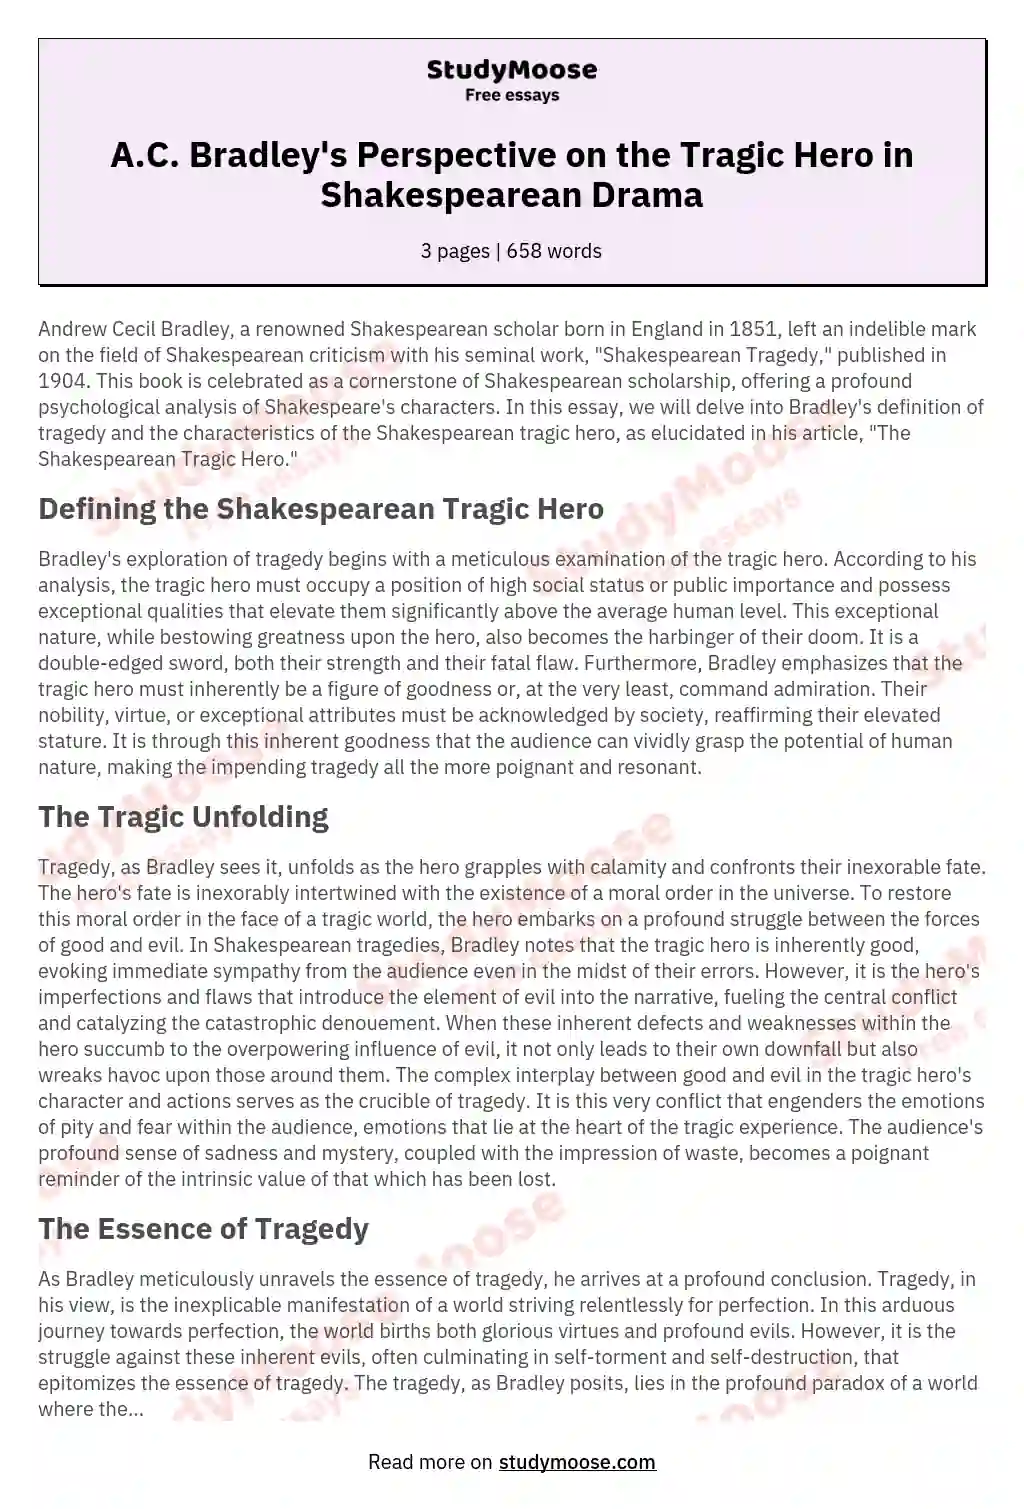 A.C. Bradley's Perspective on the Tragic Hero in Shakespearean Drama essay